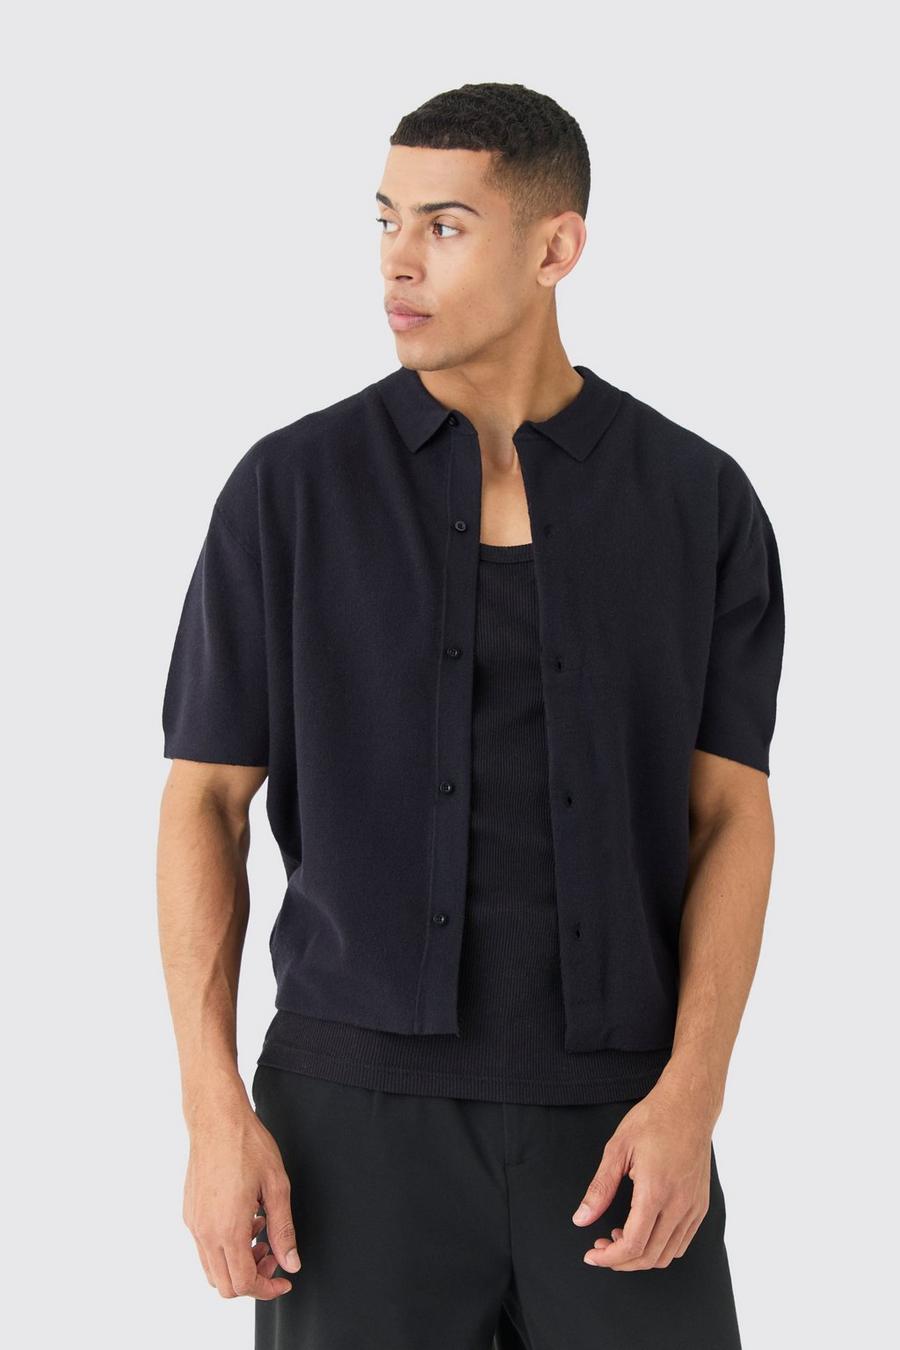 Black Oversized Boxy Fit Short Sleeve Knitted Shirt